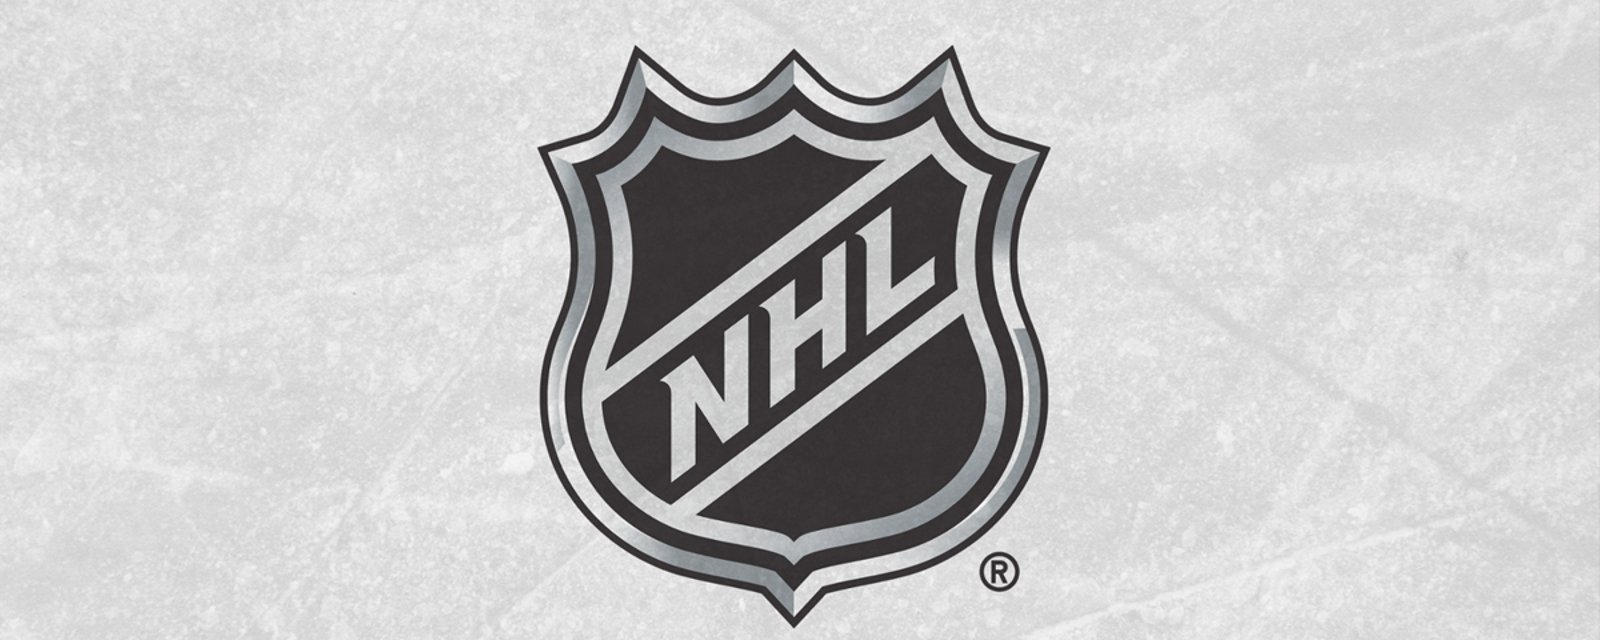 NHL announces postponement of the 2020 NHL Draft